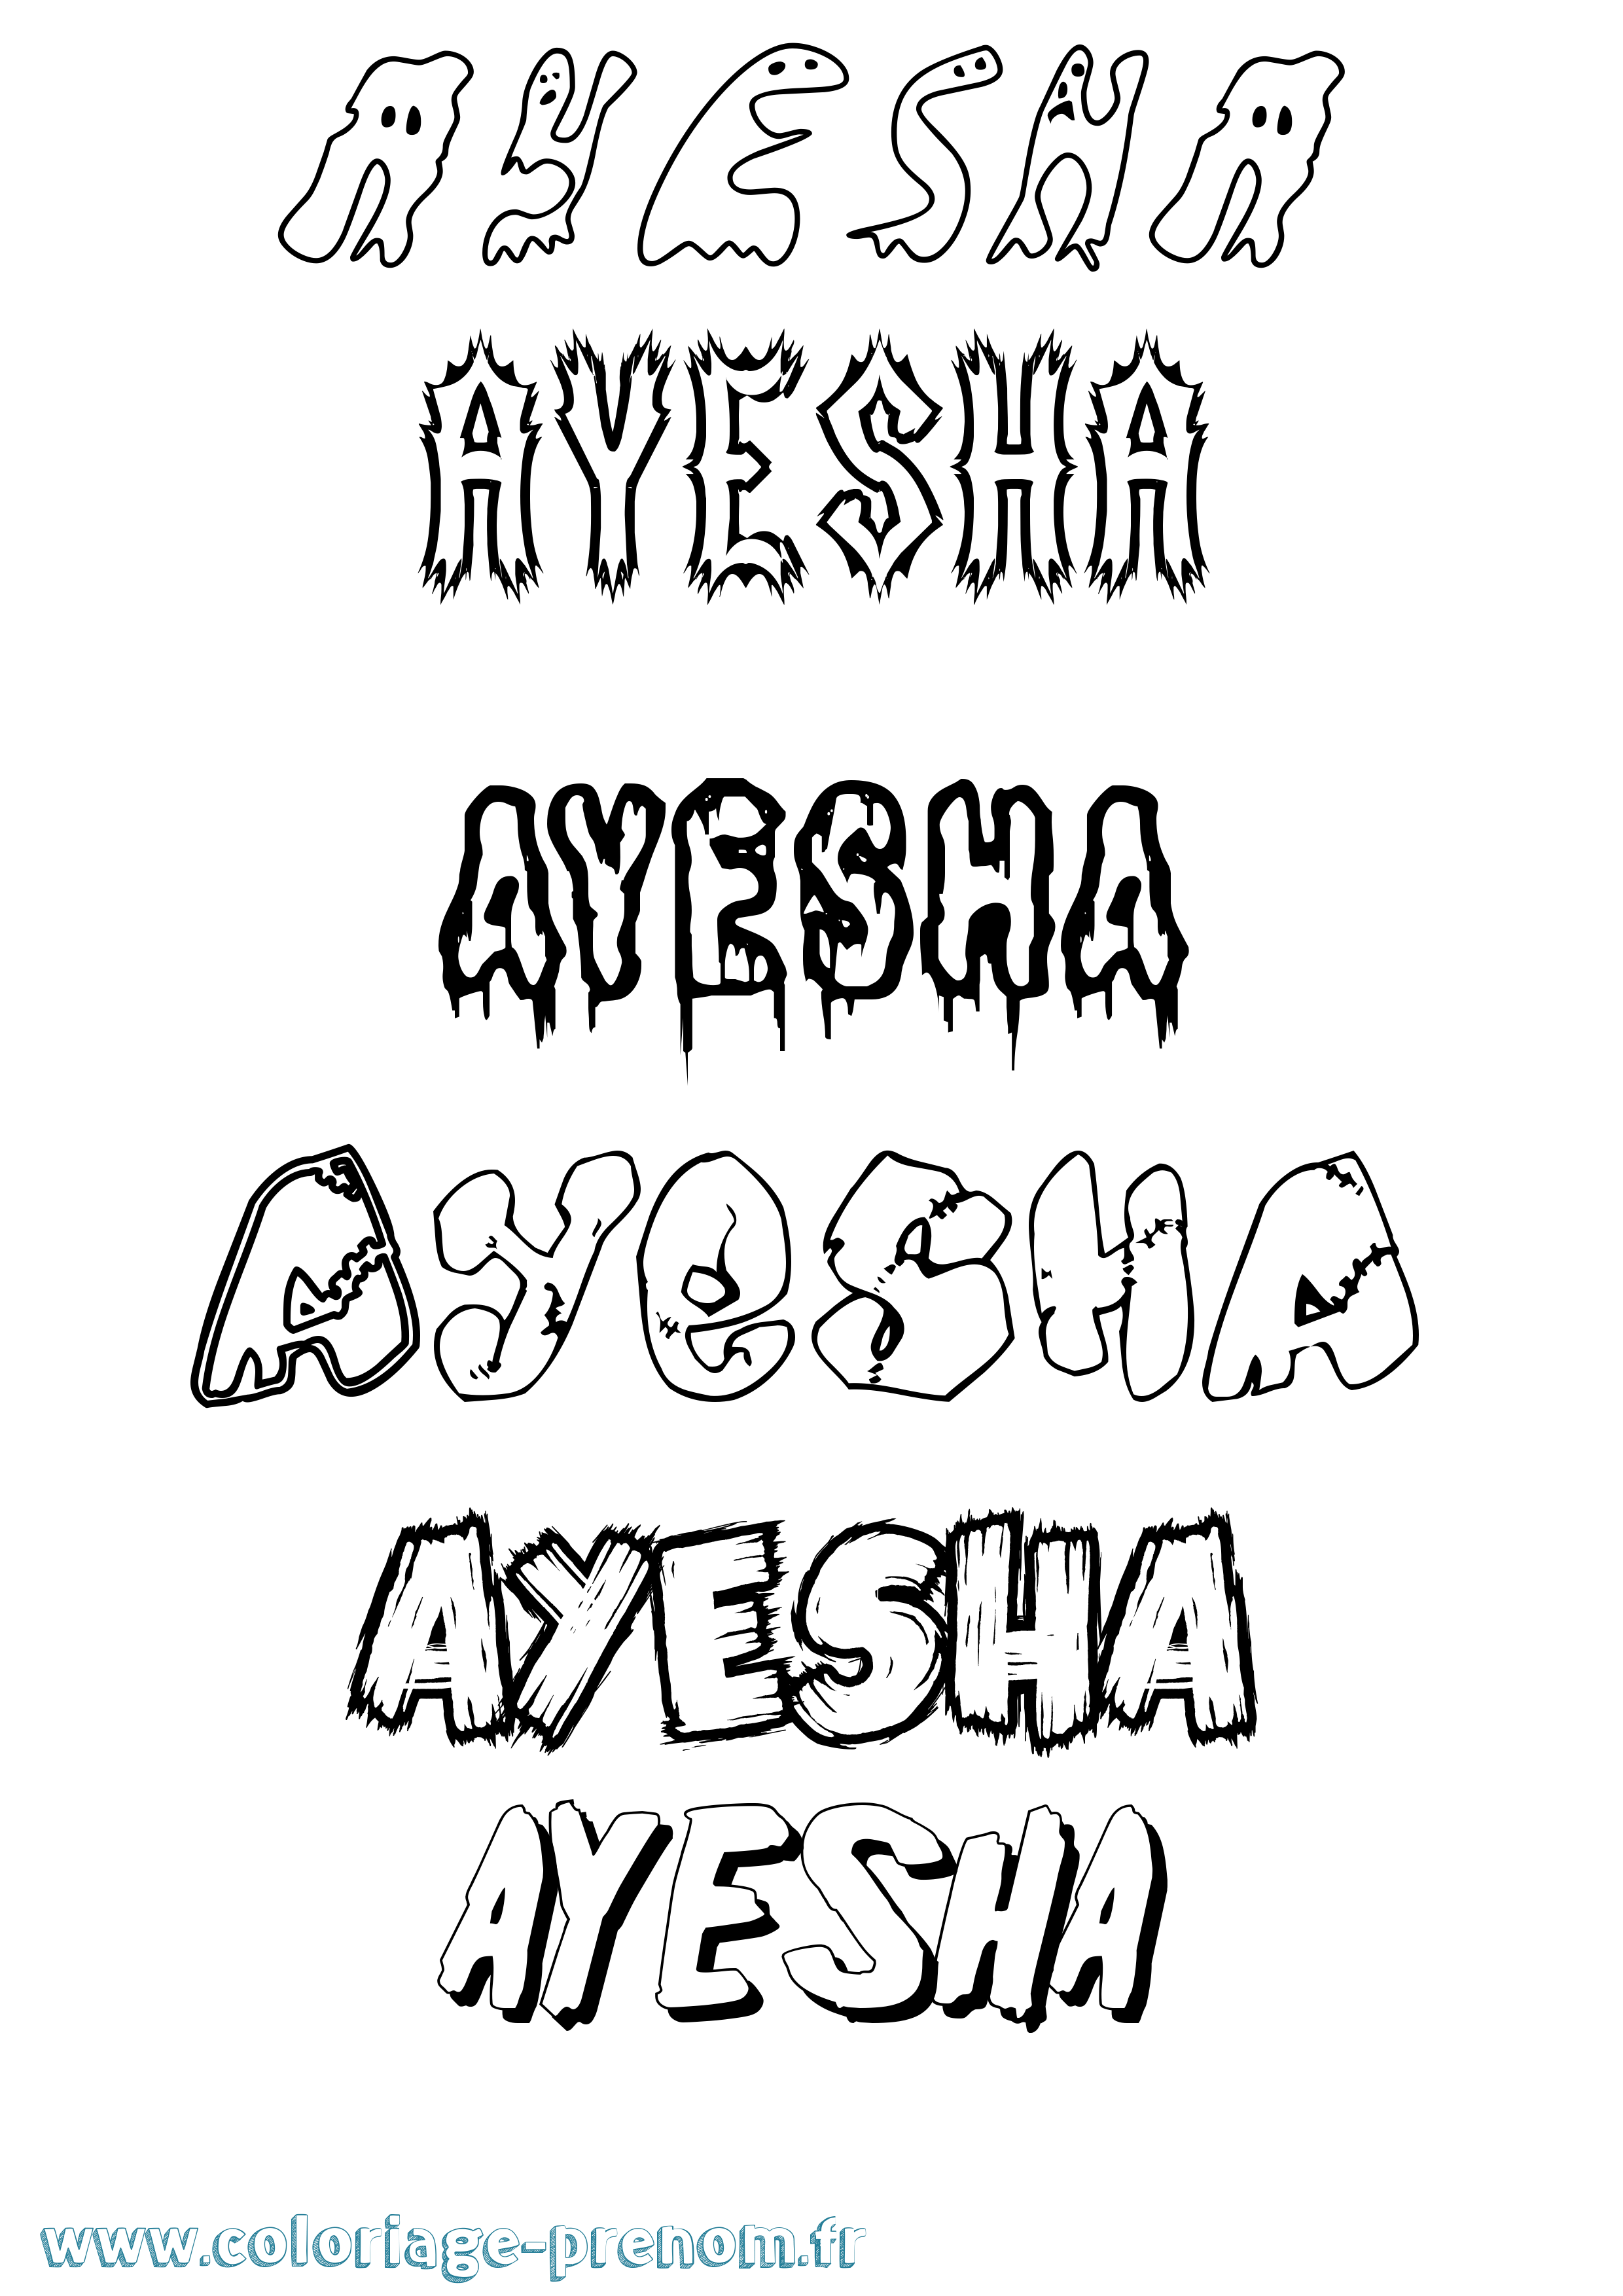 Coloriage prénom Ayesha Frisson